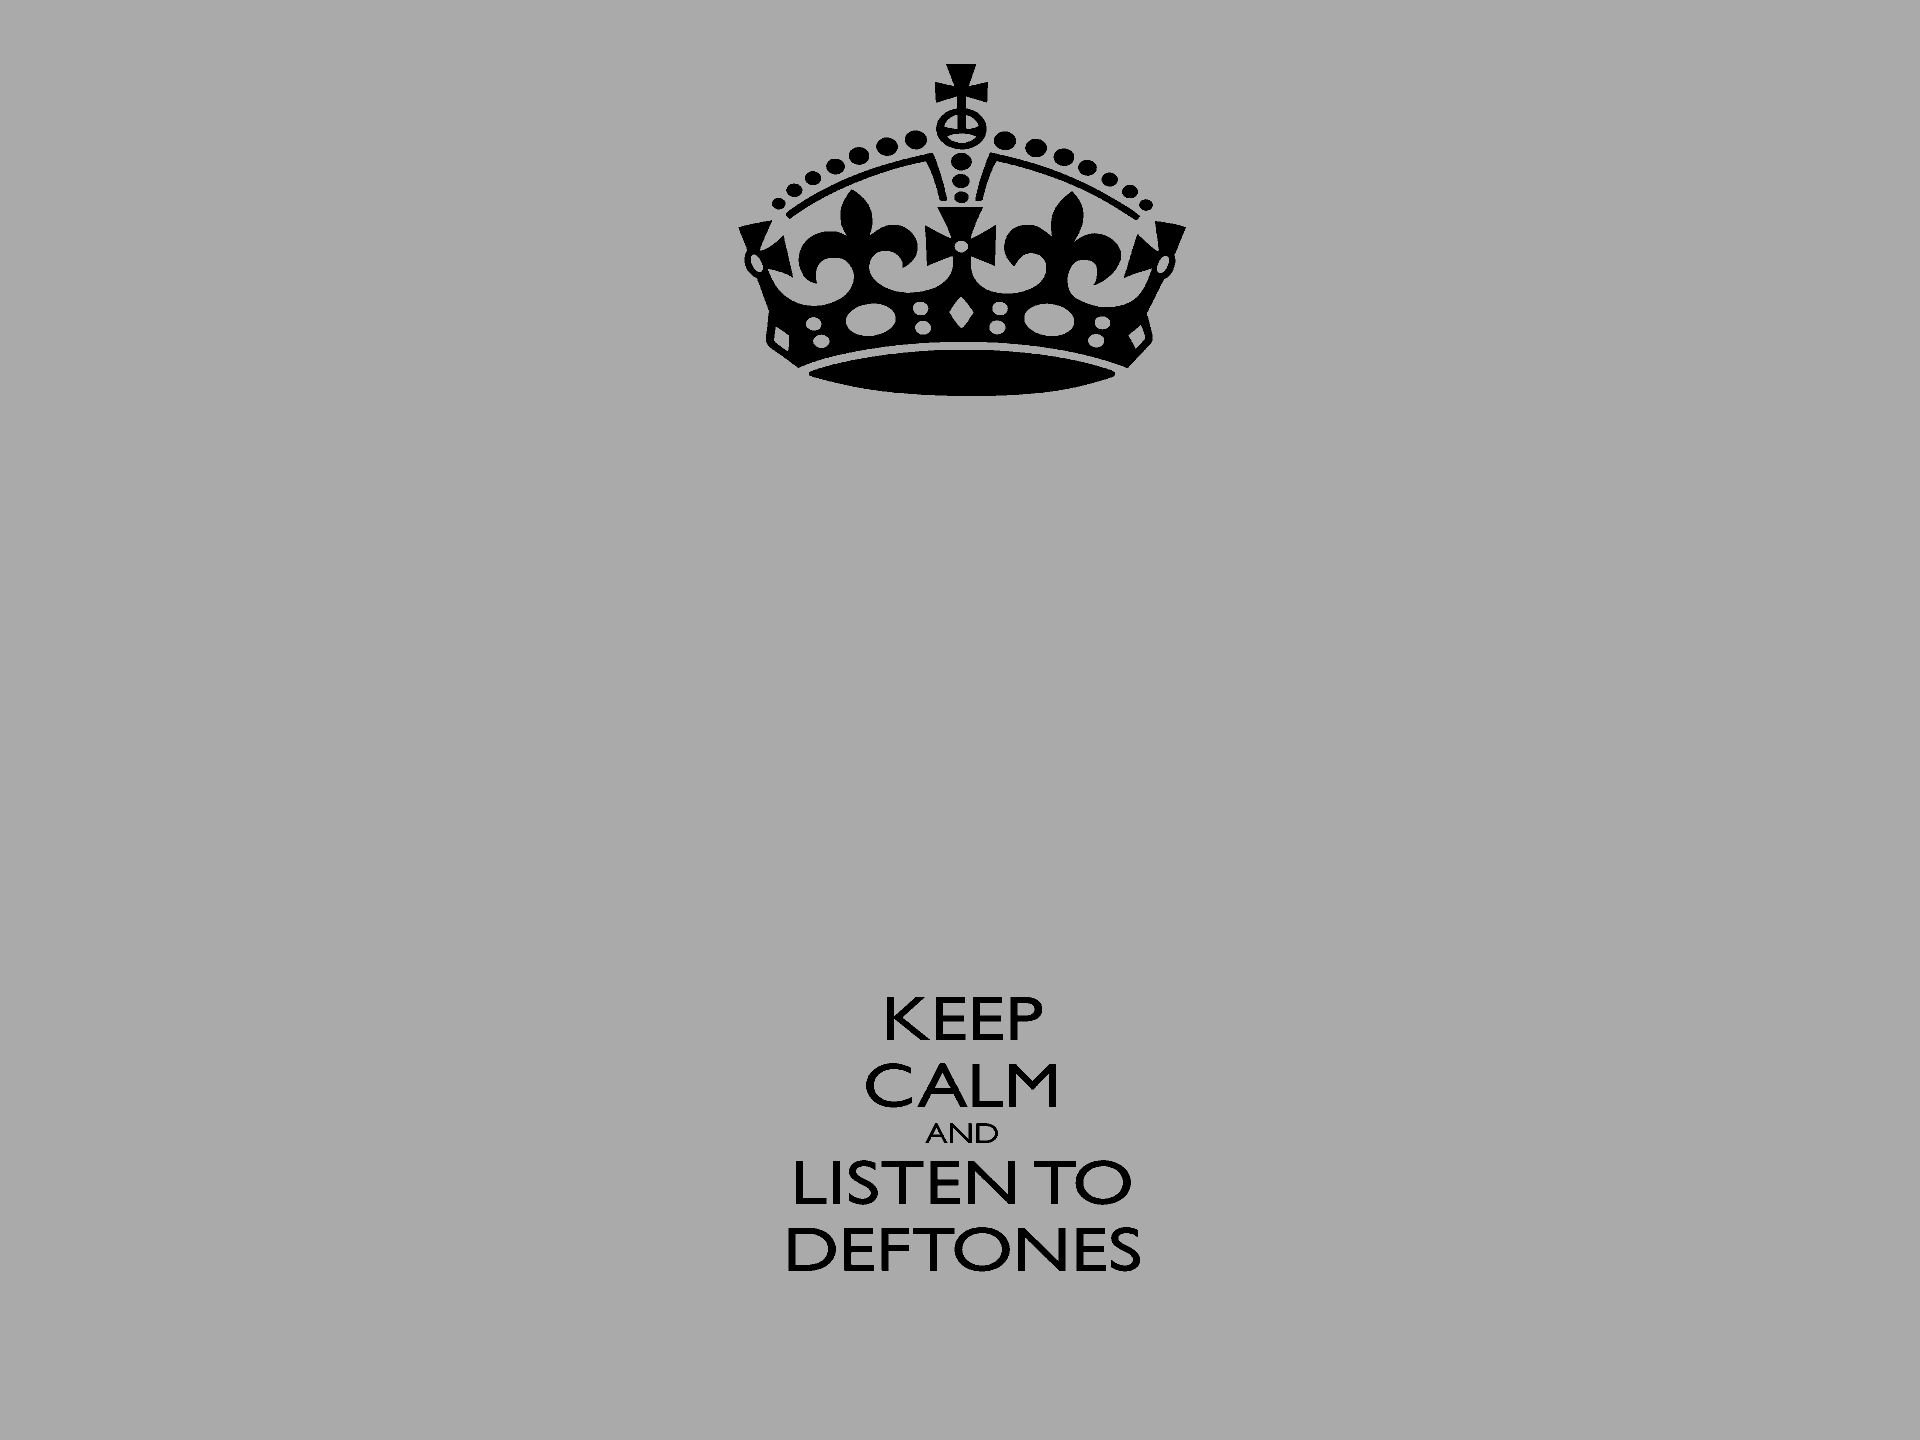 deftones, Alternative, Metal, Experimental, Rock, Nu metal, Heavy, Hard, Keep, Calm Wallpaper